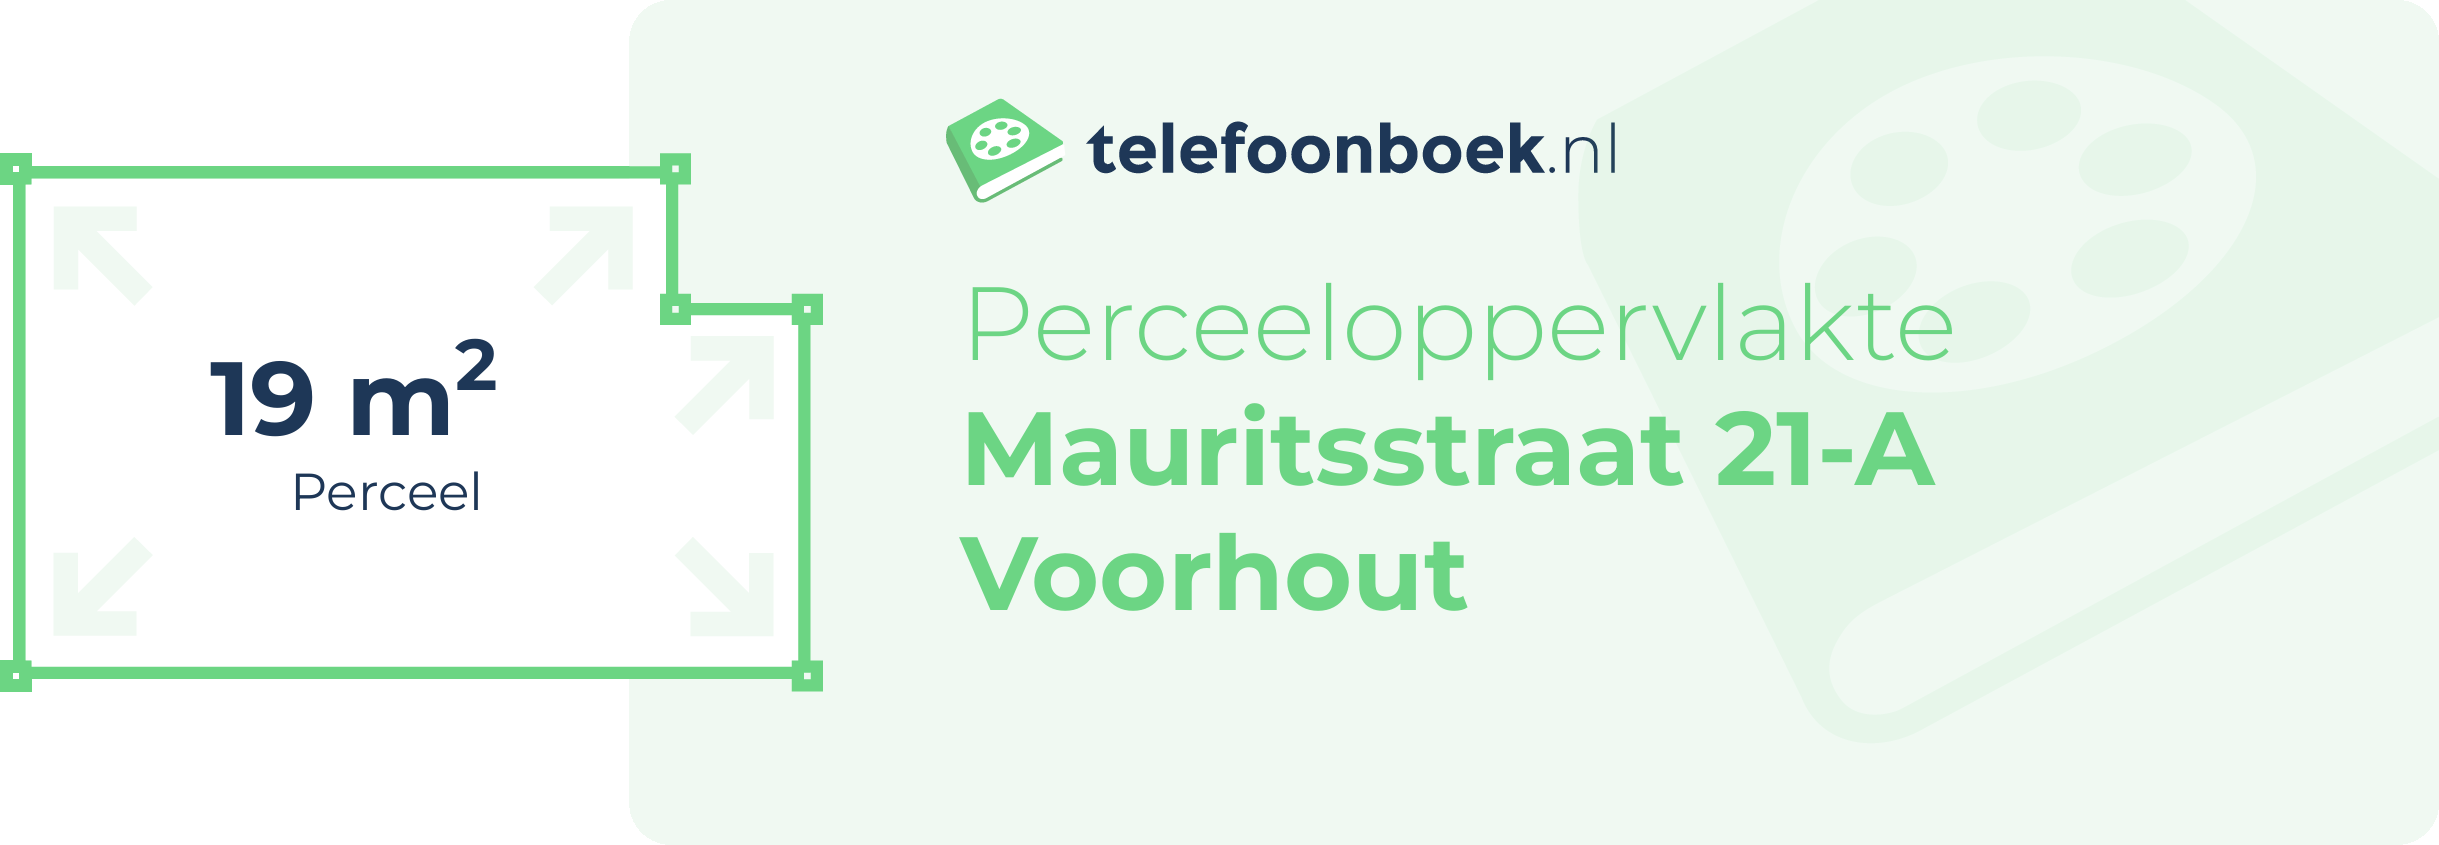 Perceeloppervlakte Mauritsstraat 21-A Voorhout